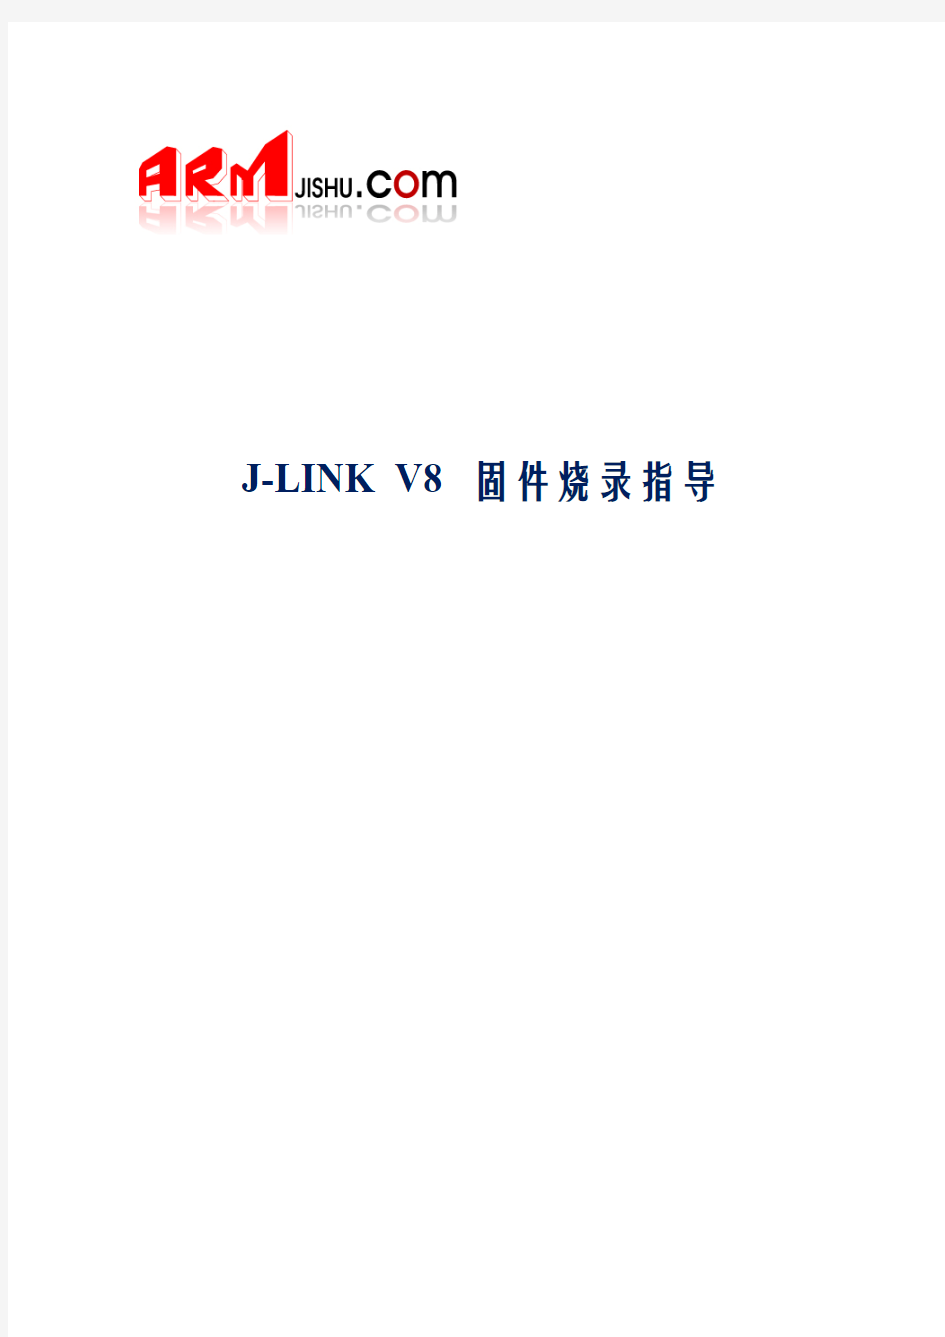 JLINK V8固件烧录和固件升级指导